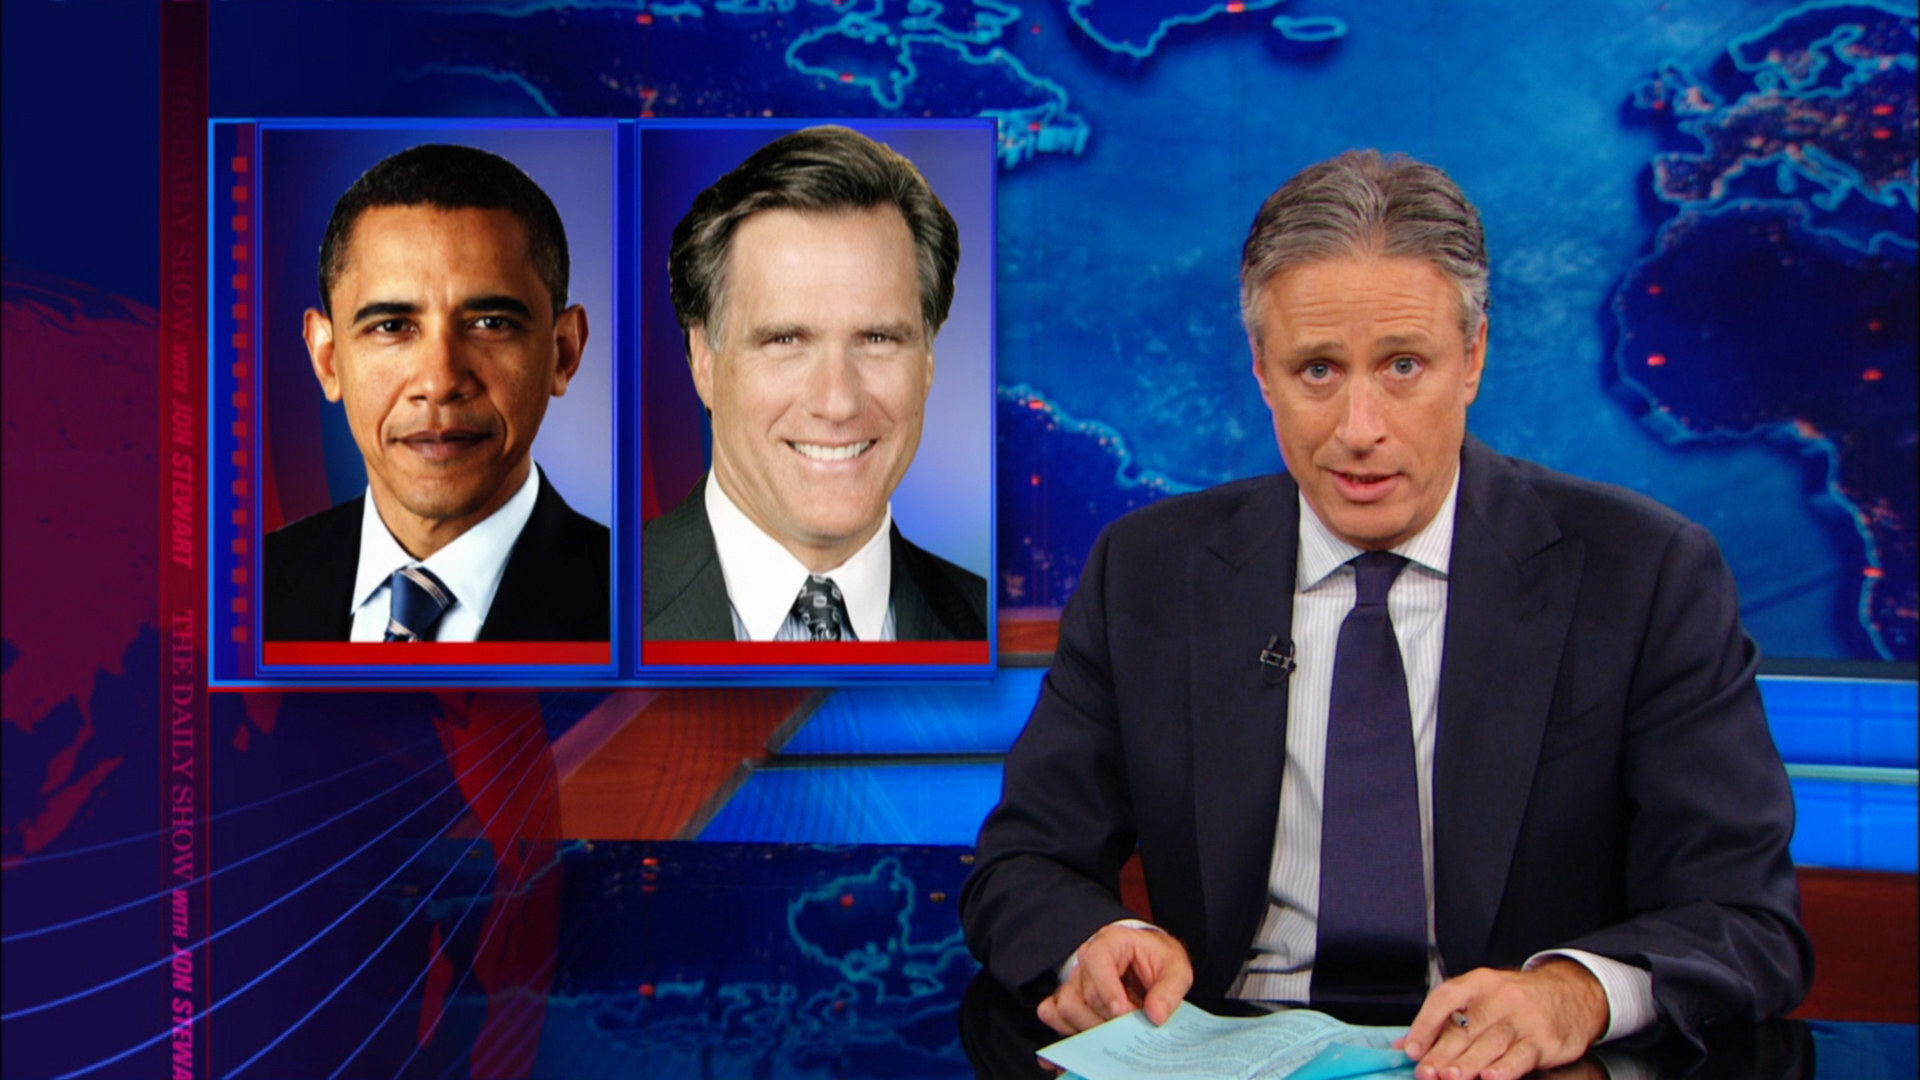 Jon Stewart hosting a segment about Obama and Romney